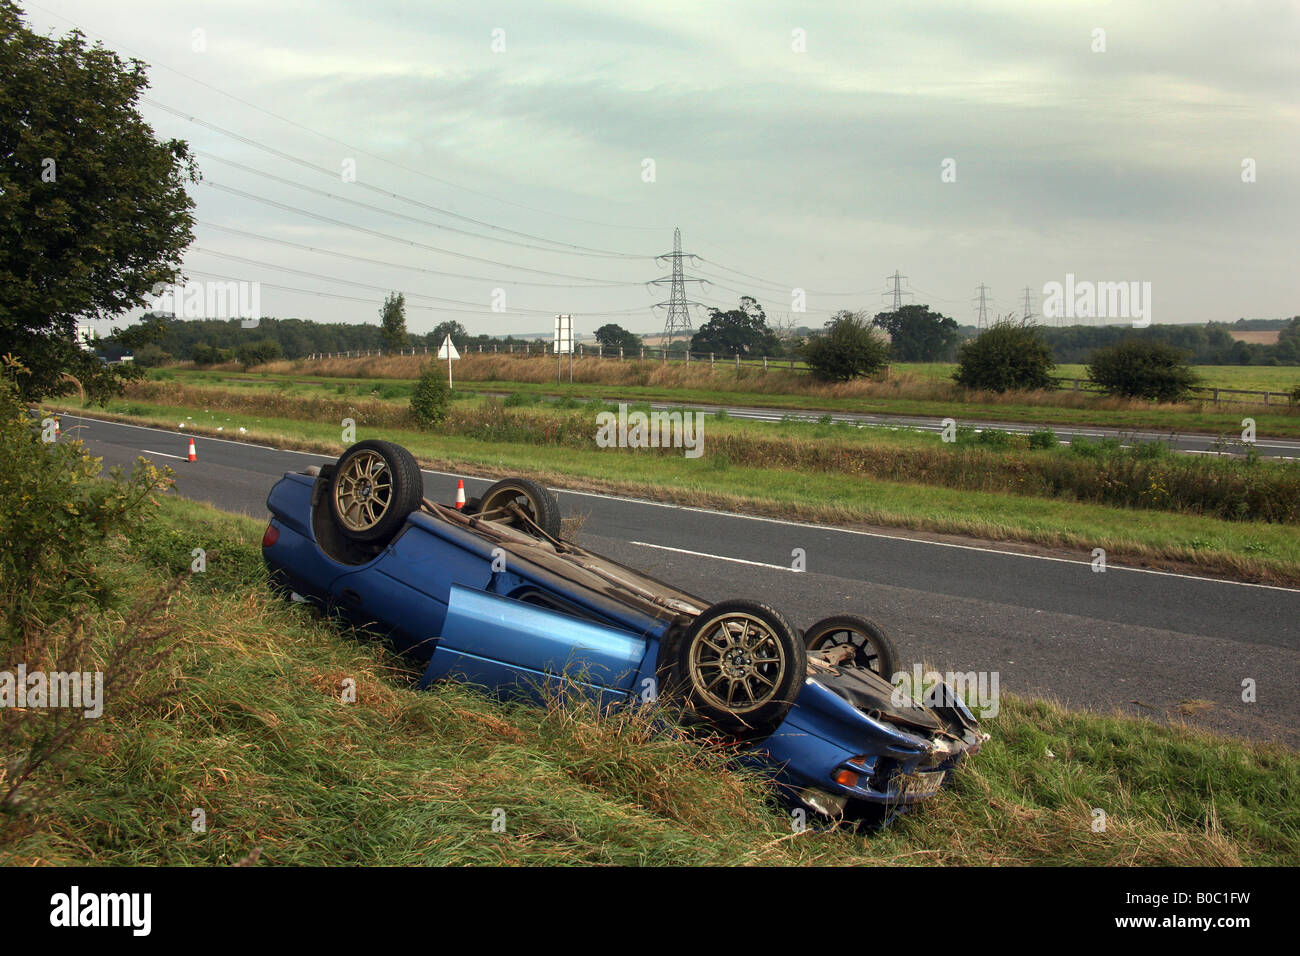 subaru-impreza-picture-shows-a-non-fatal-car-accident-on-the-a1307-B0C1FW.jpg